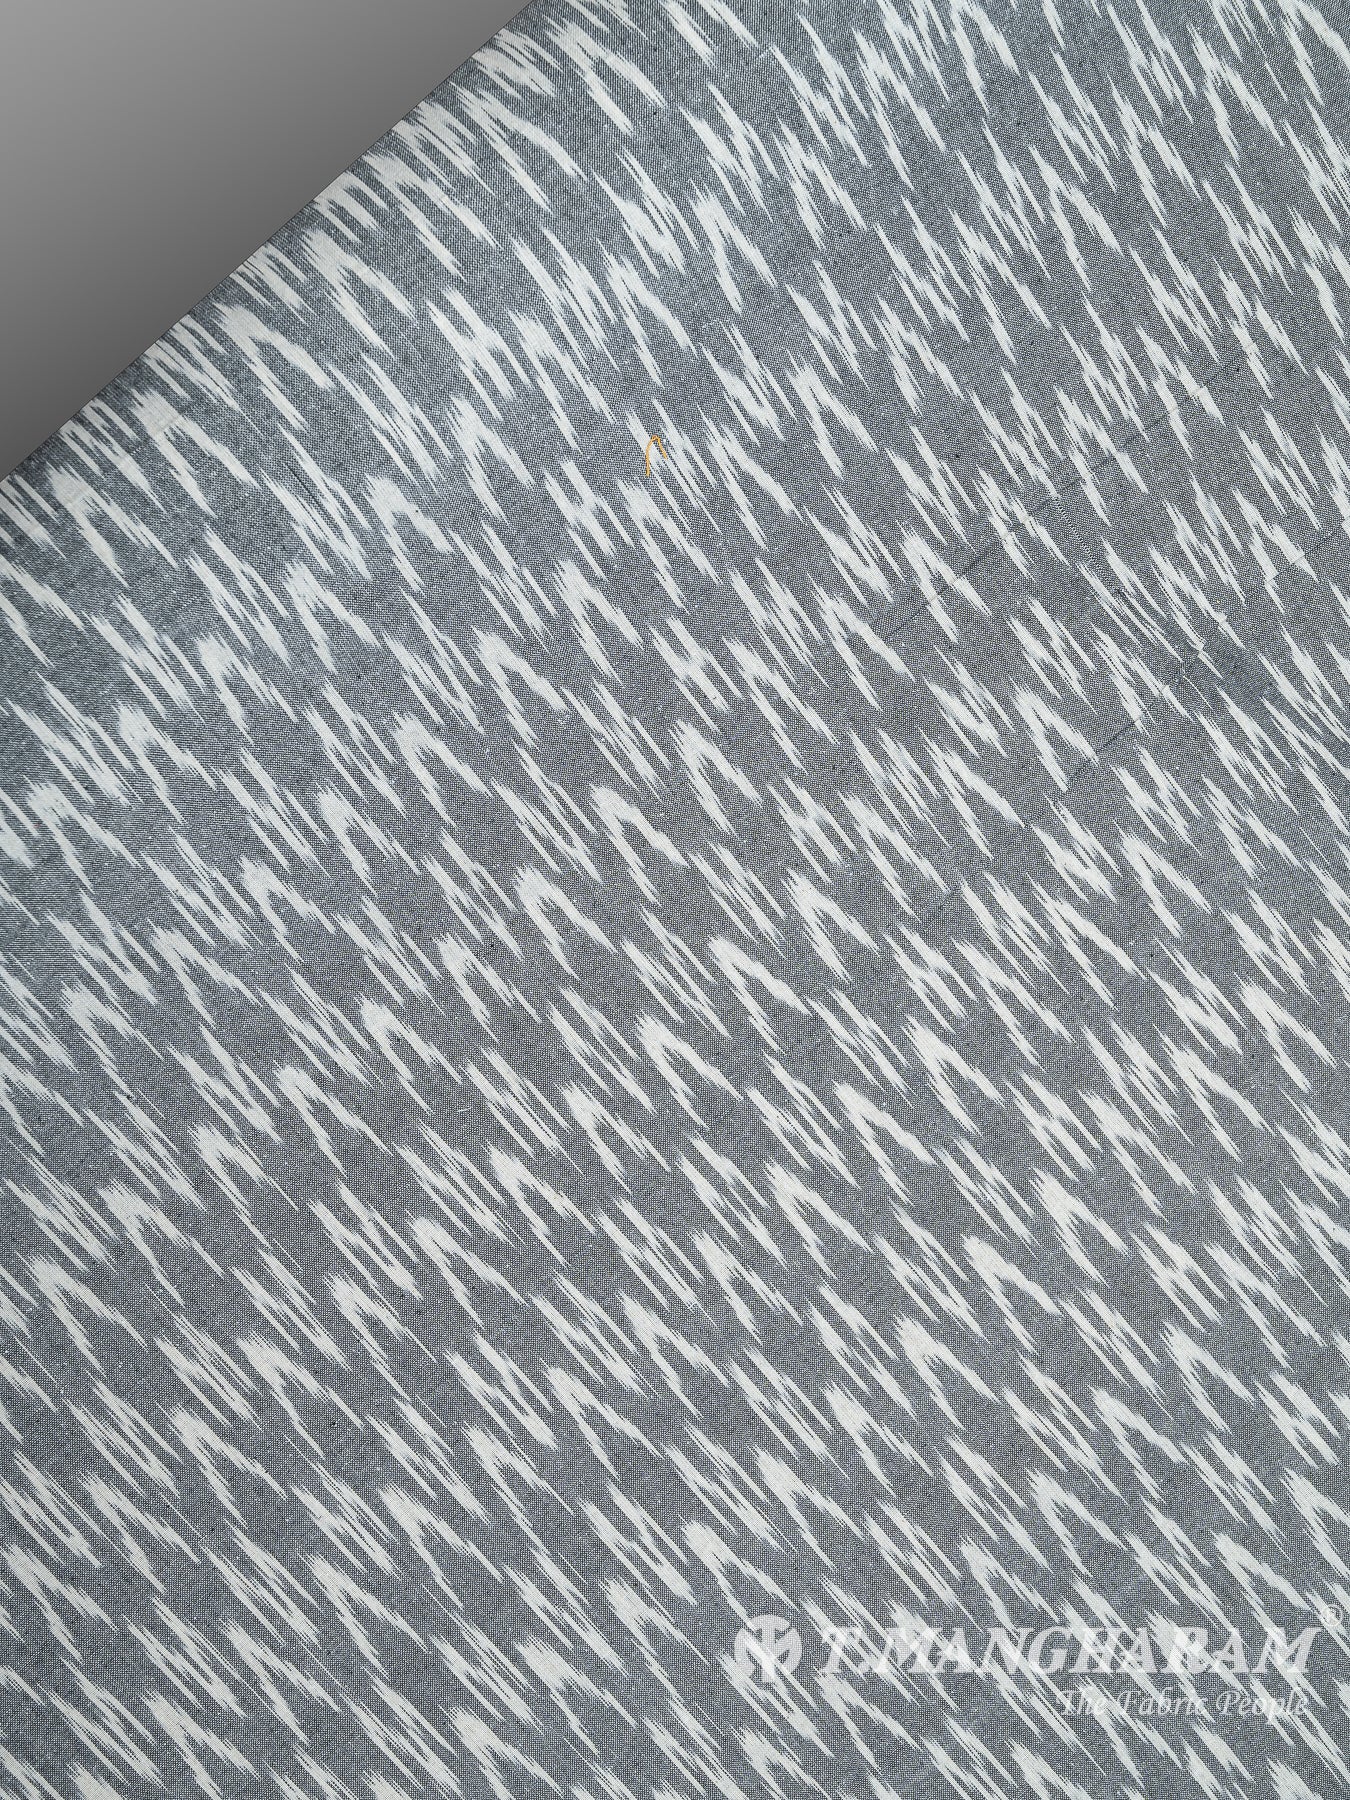 Grey Cotton Ikat Print Fabric - EB5844 view-2